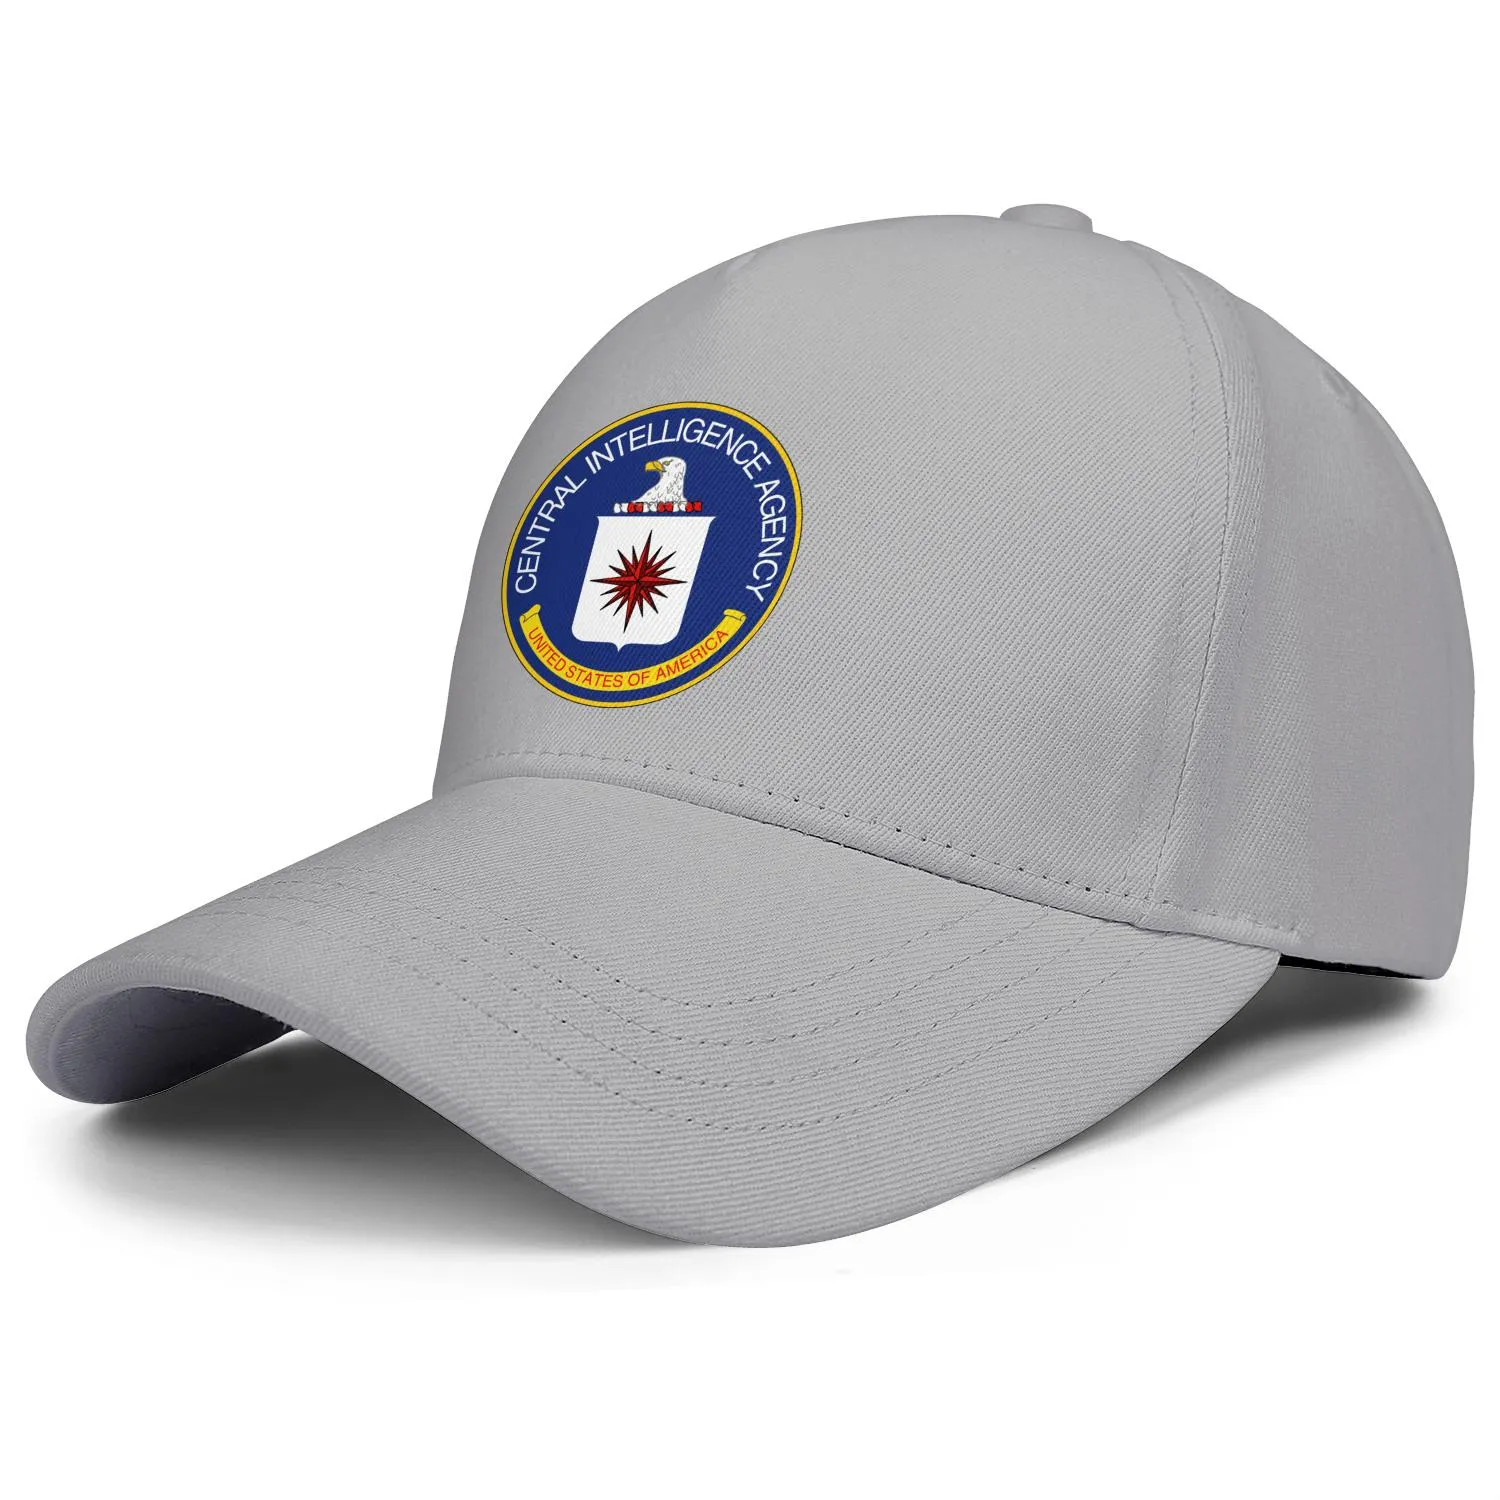 Central Intelligence Agency Logo mens and women adjustable trucker cap cool vintage personalized original baseballhats223m2286645